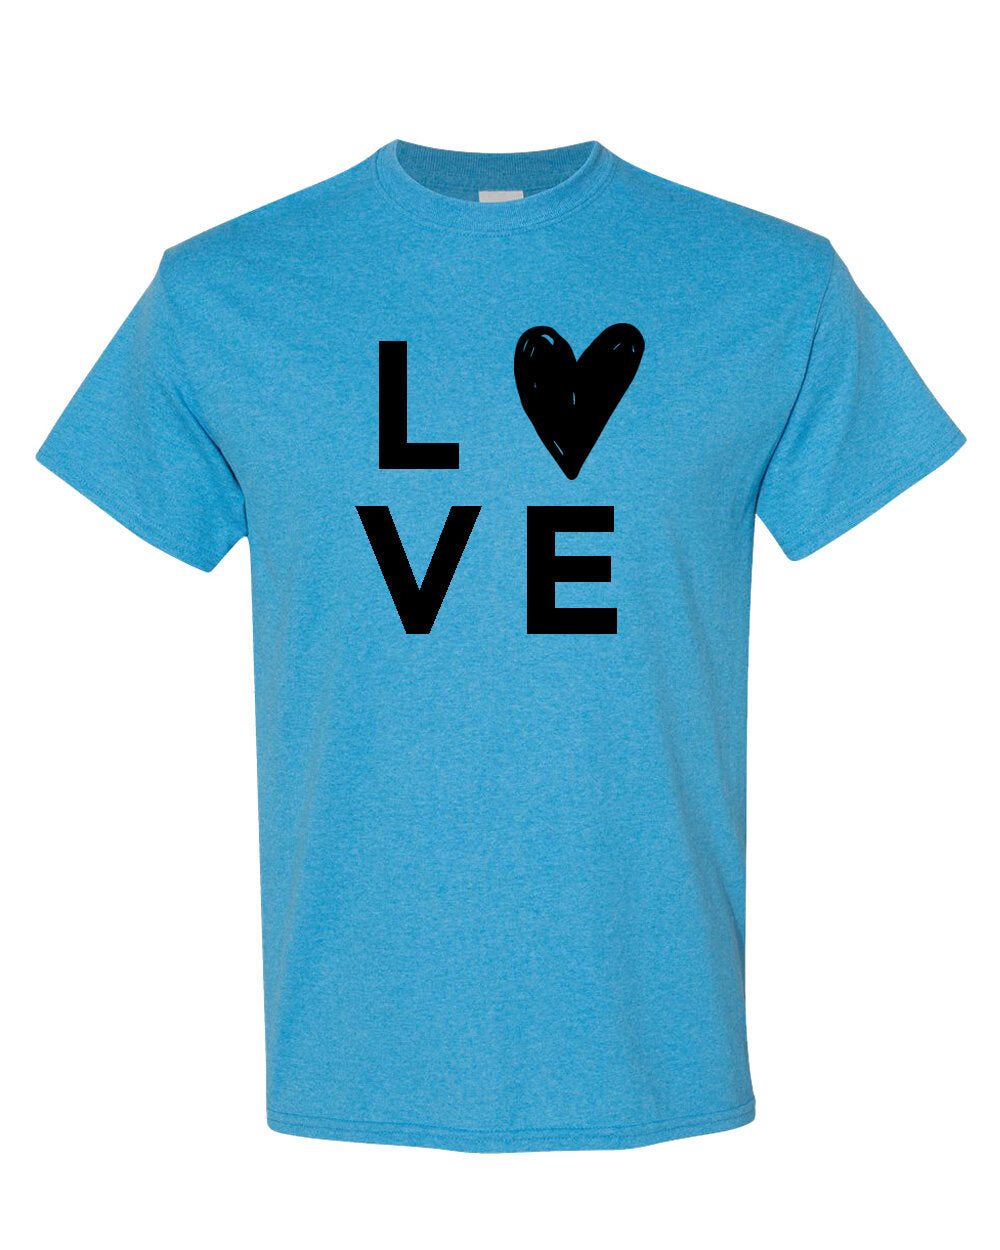 Love T-Shirt Blue (Adult & Youth Unisex Sizes)